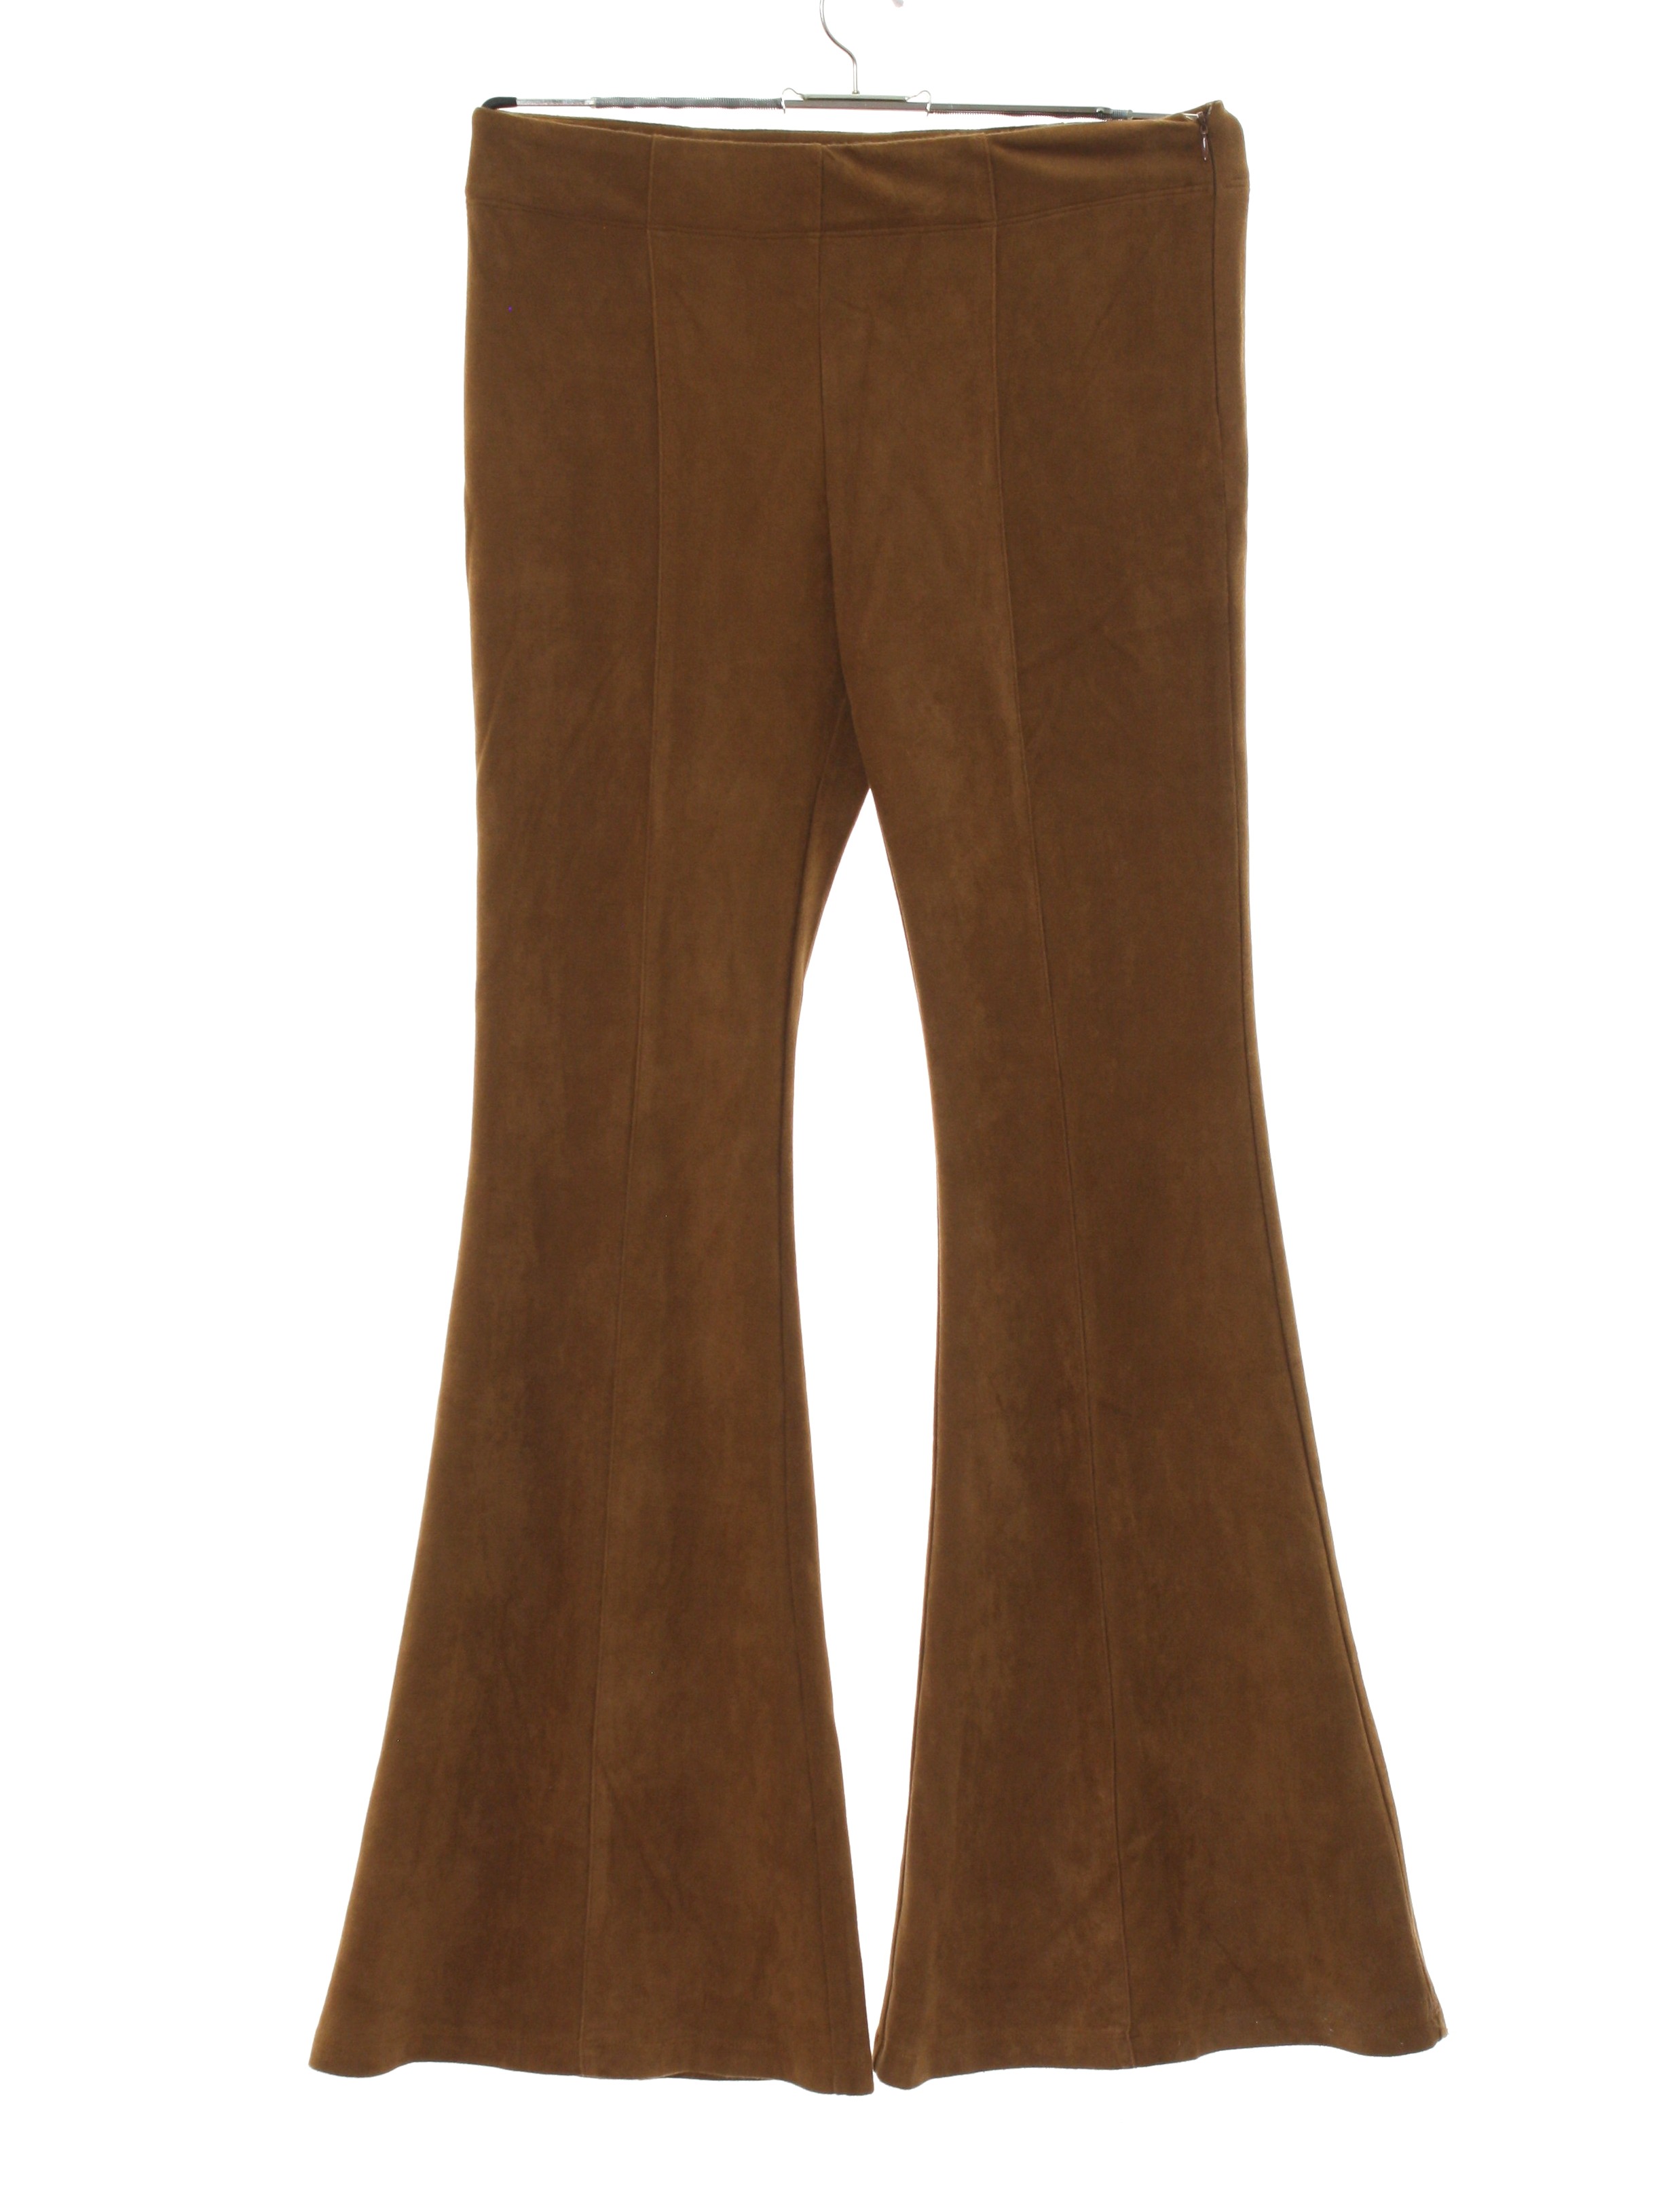 Retro 70s Bellbottom Pants (Gianni Bini) : 70s style (made recently ...